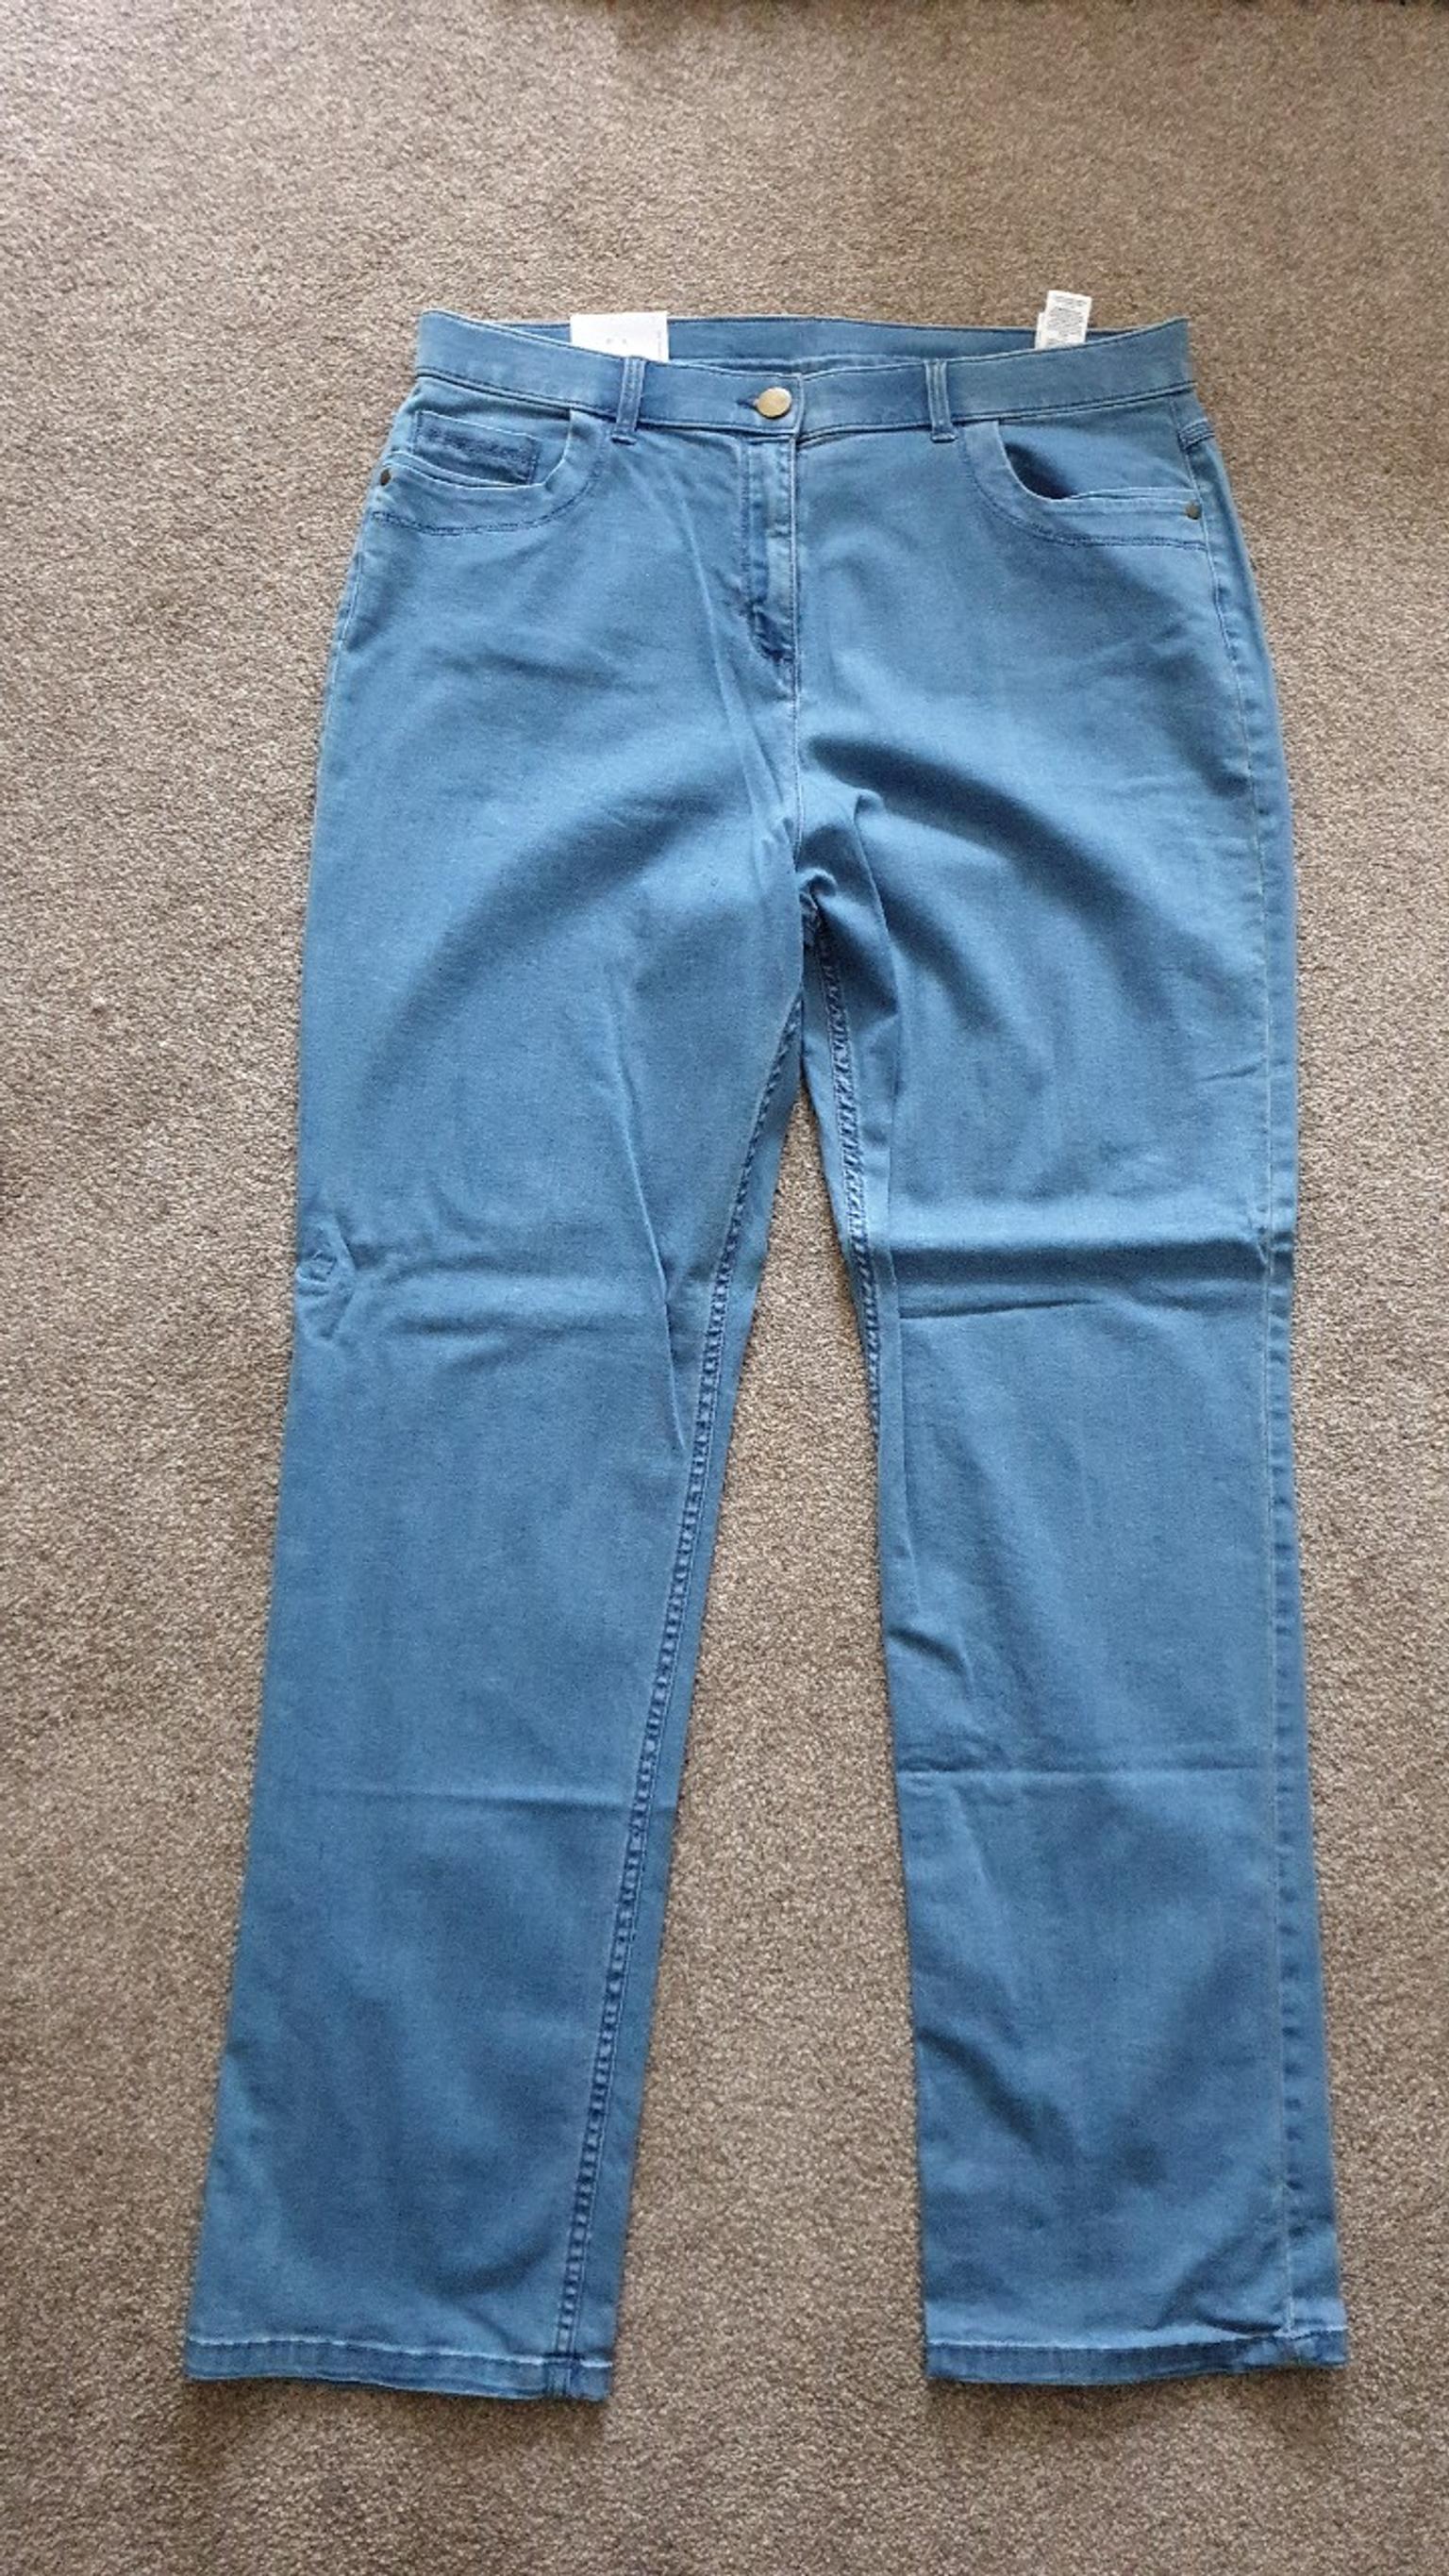 m & s classic jeans